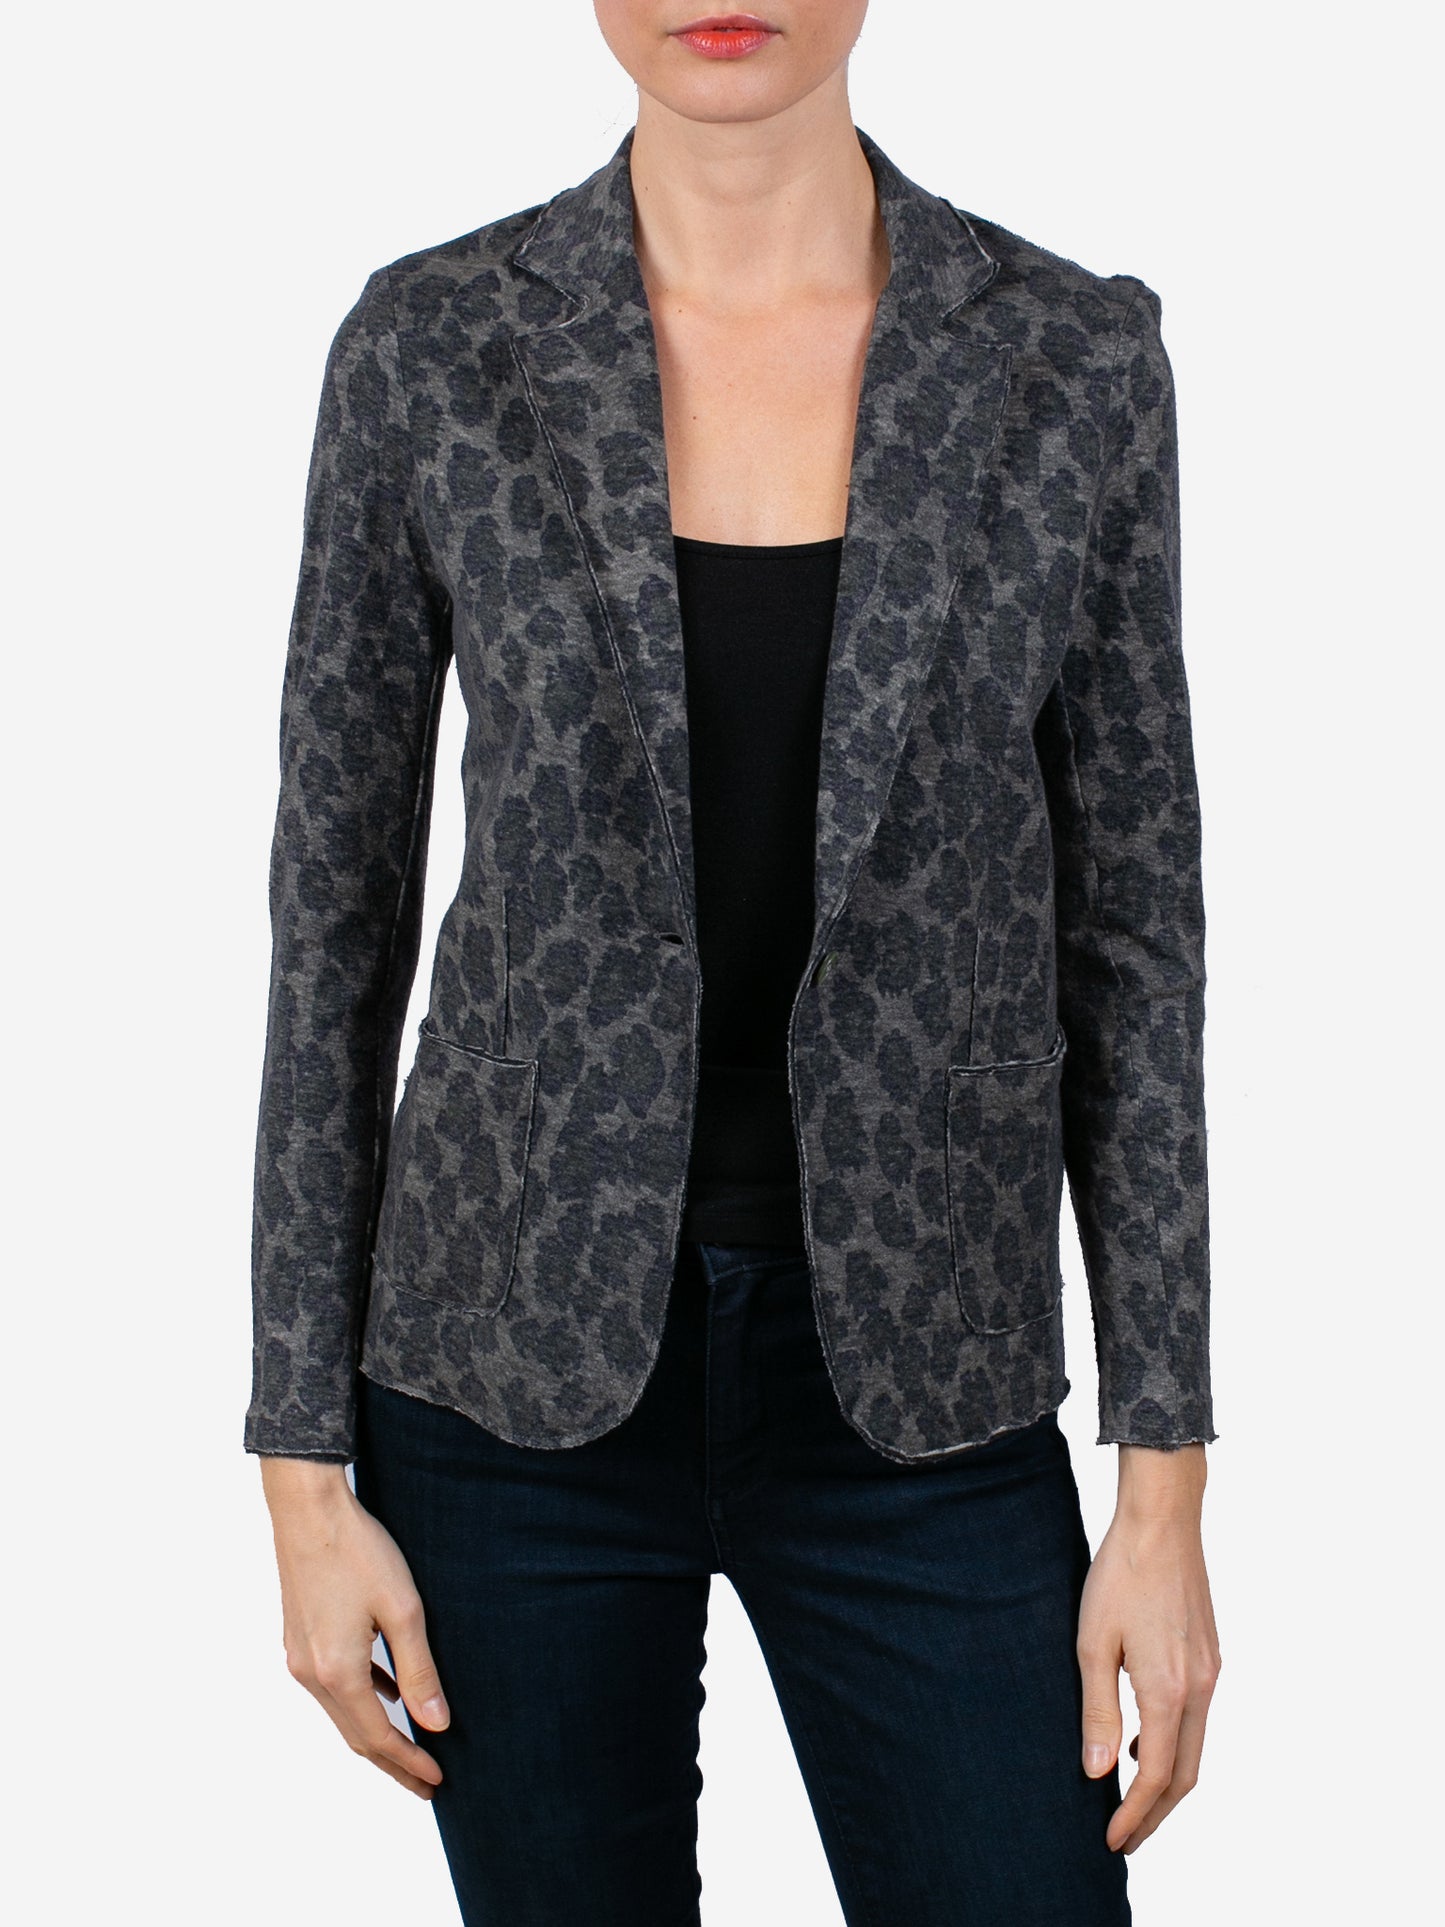 Majestic Women's Leopard Print One-Button Blazer